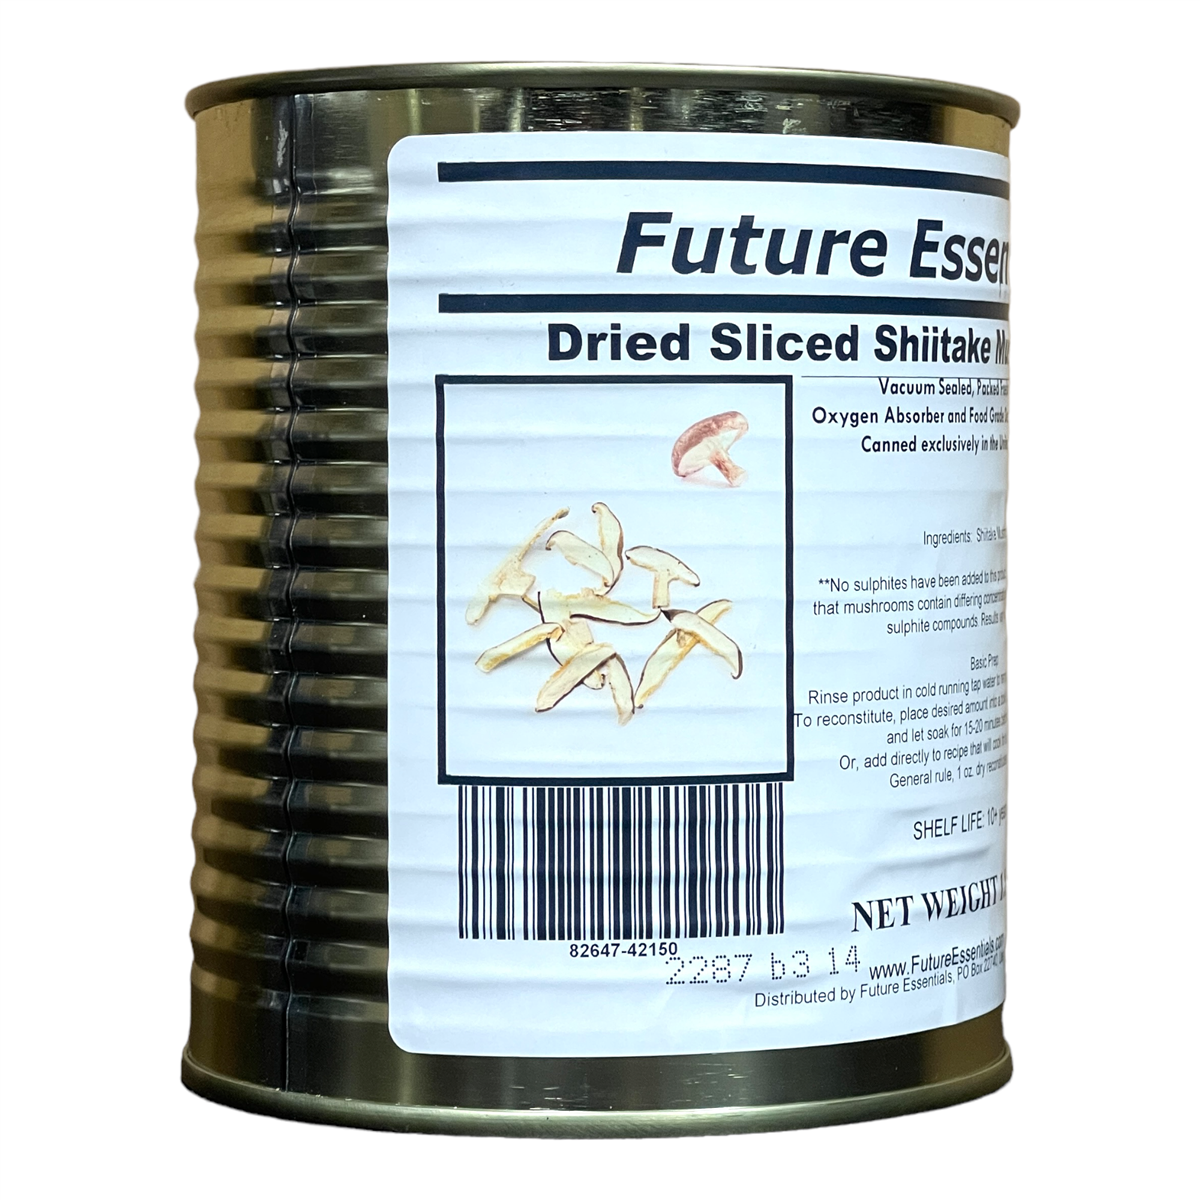 Future Essentials Dehydrated Sliced Shiitake Mushrooms